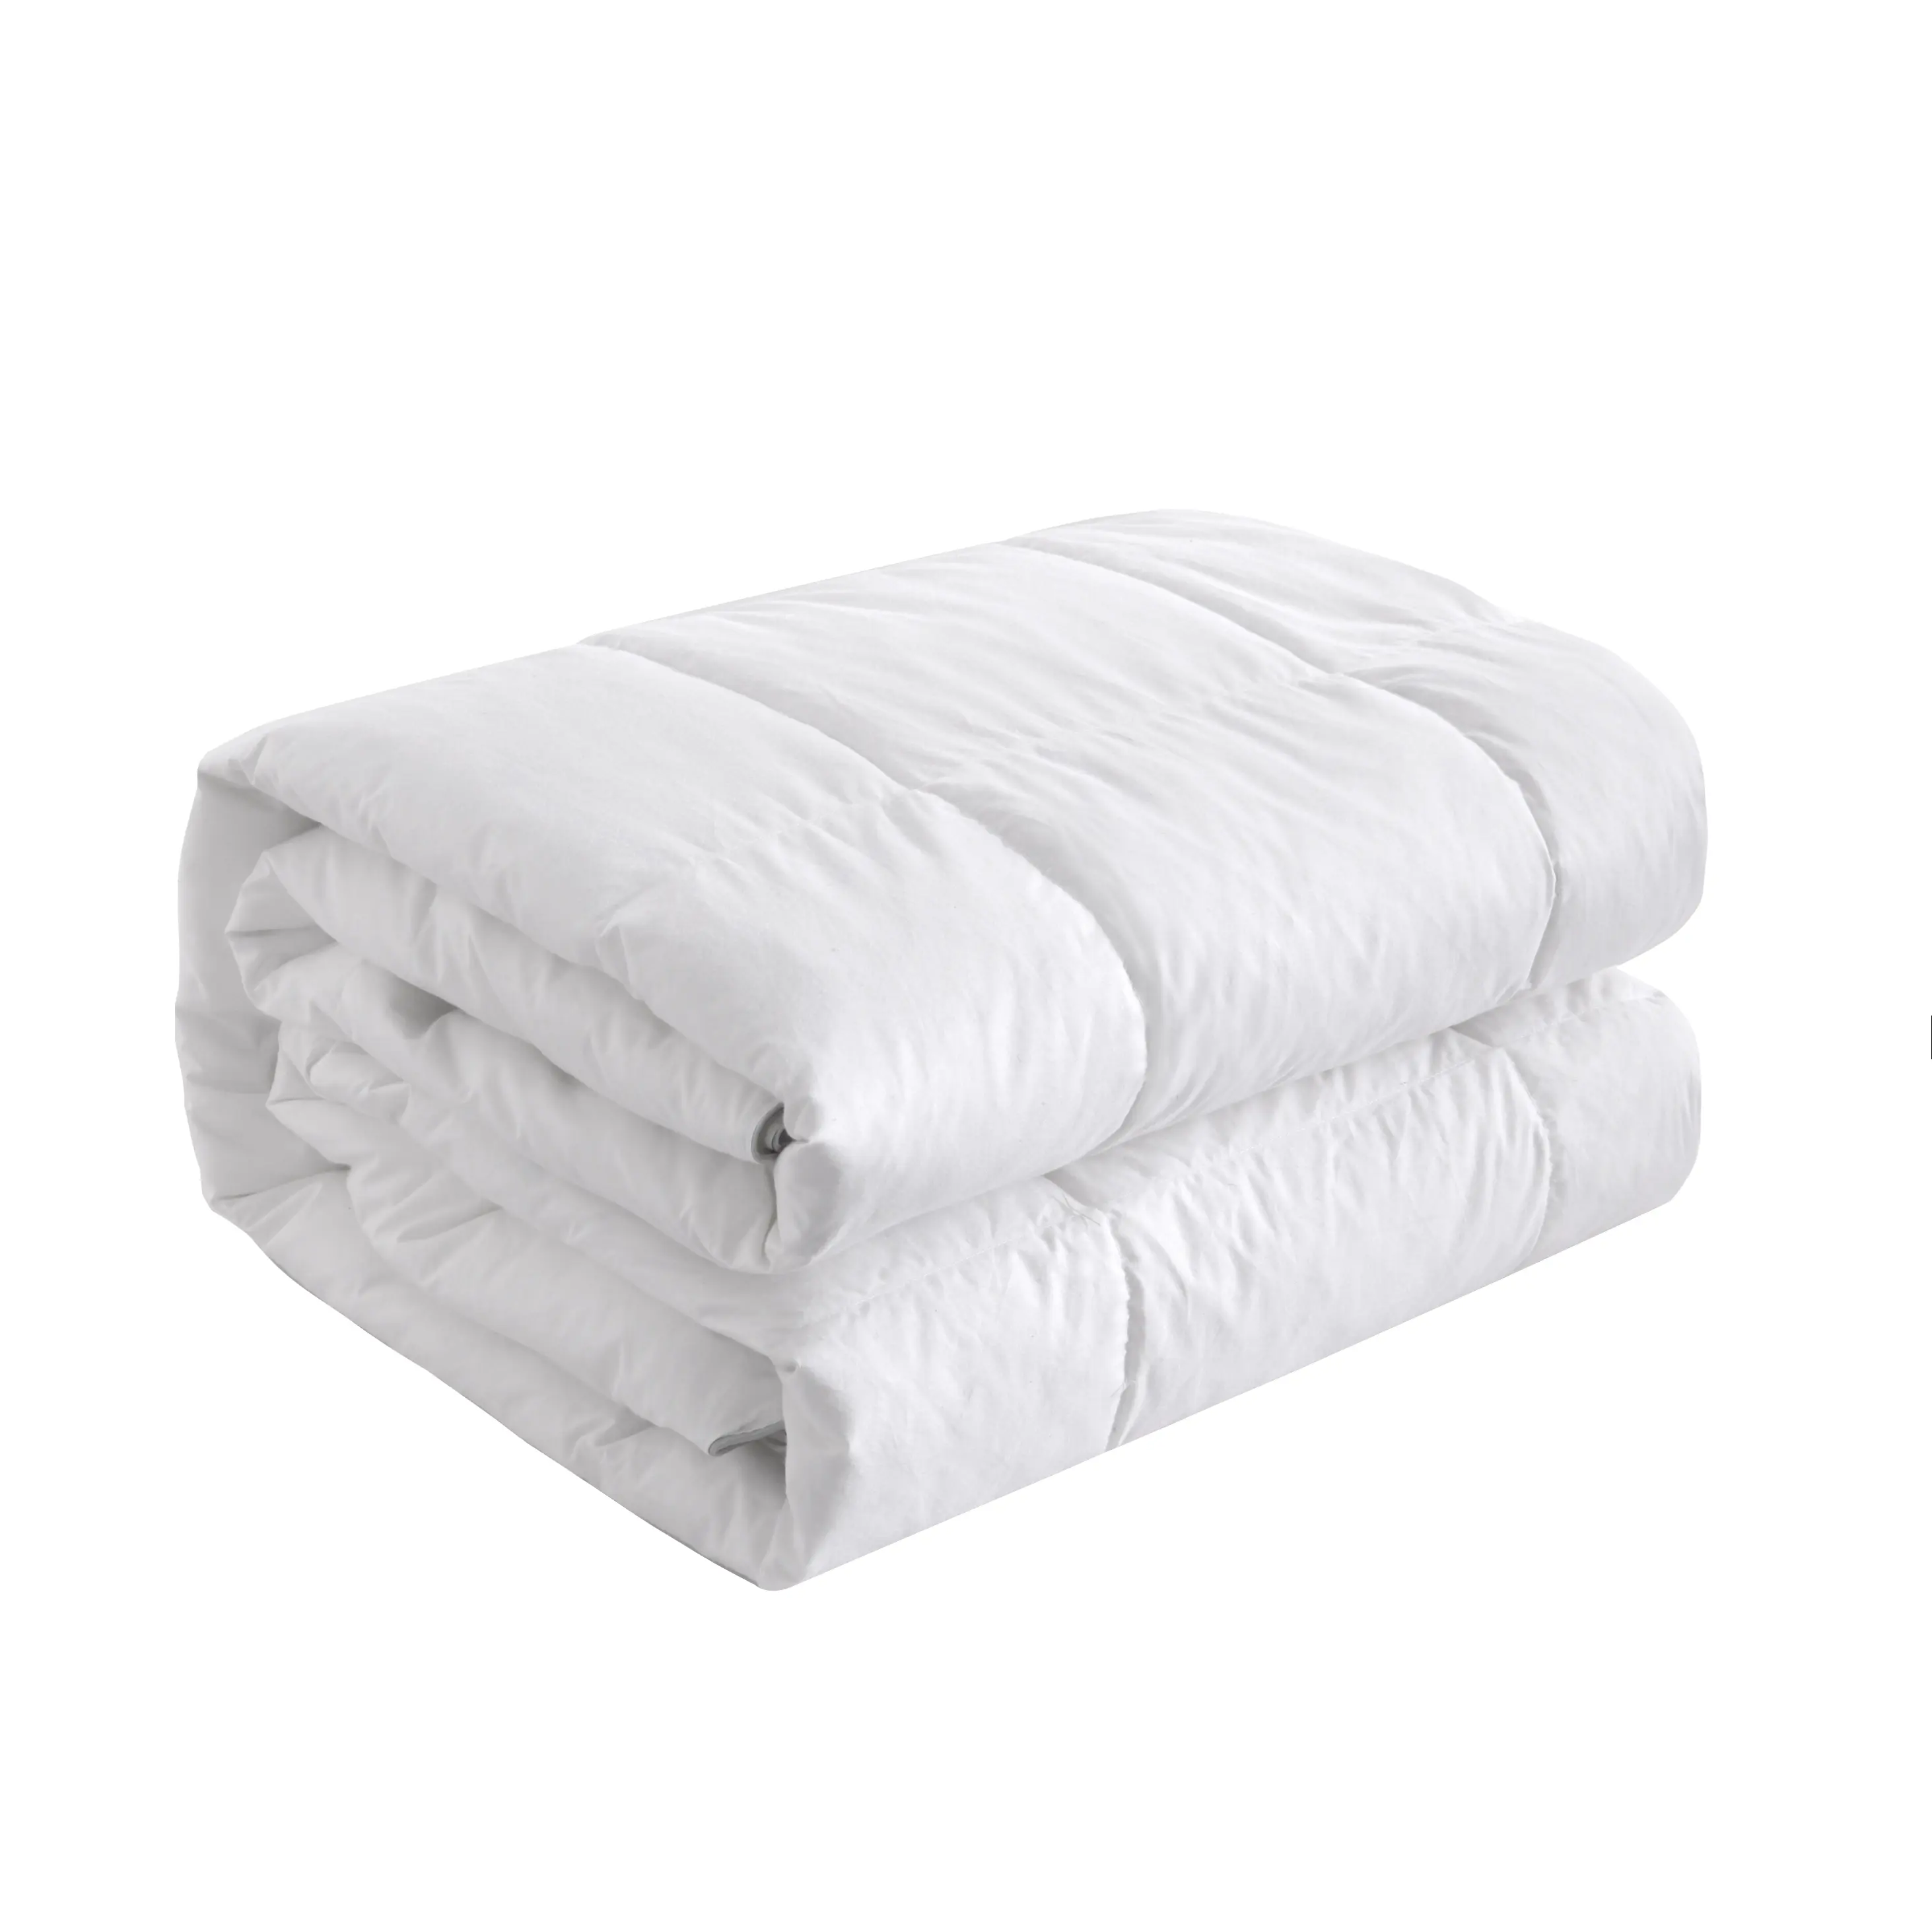 OEM/ODM Hot Sales Bettdecke aus weißen Enten federn